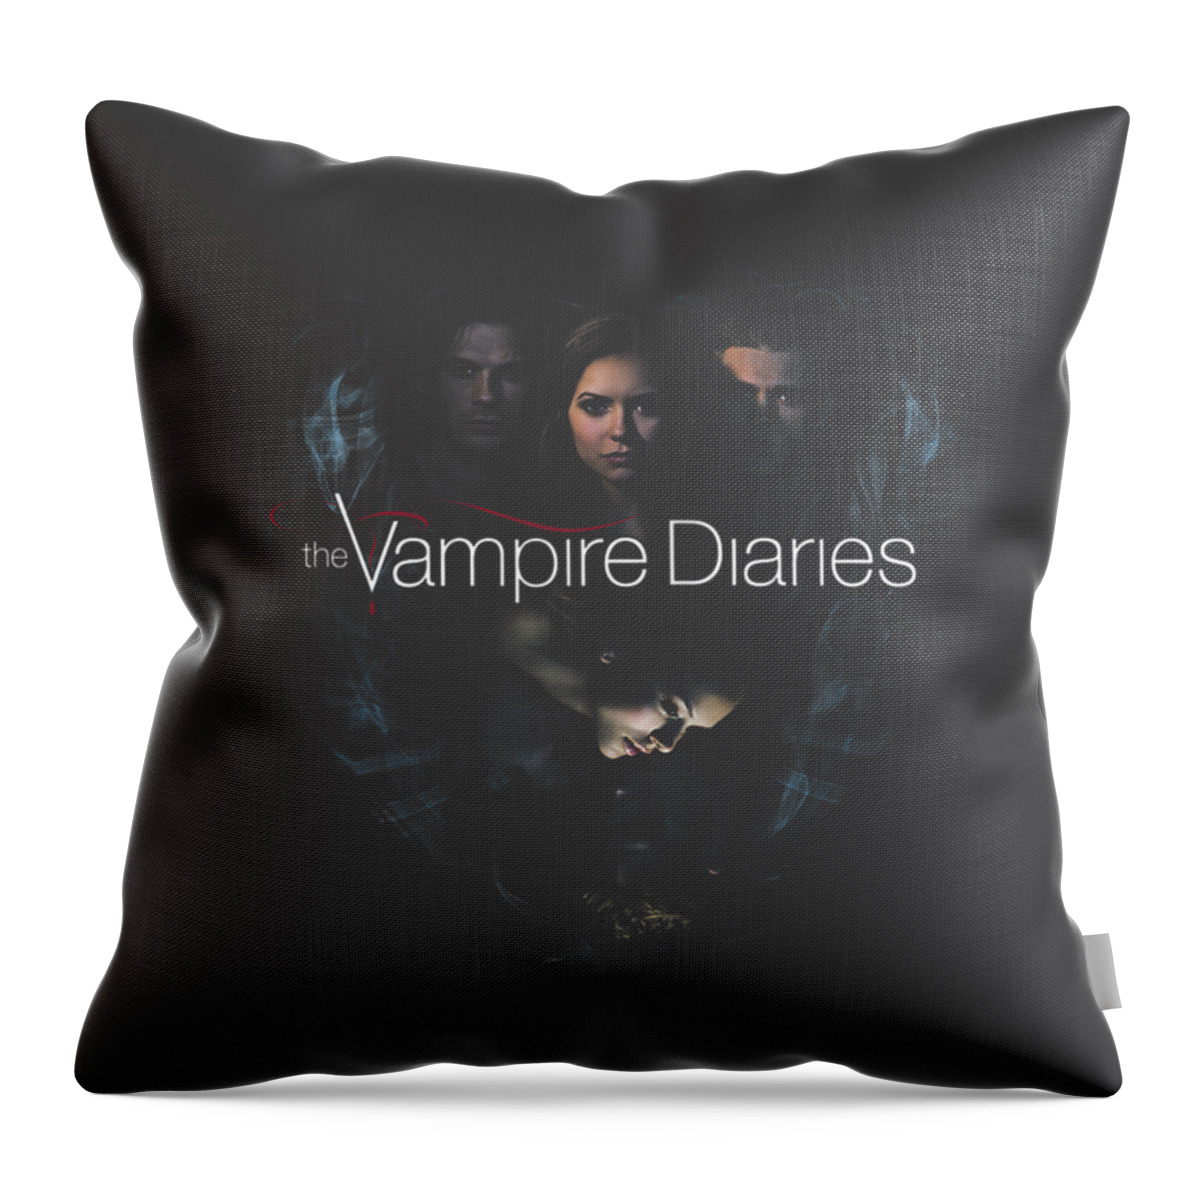 Vampire Diaries Hearts Desire Throw Pillow featuring the digital art Vampire Diaries Hearts Desire by Saihae Georg